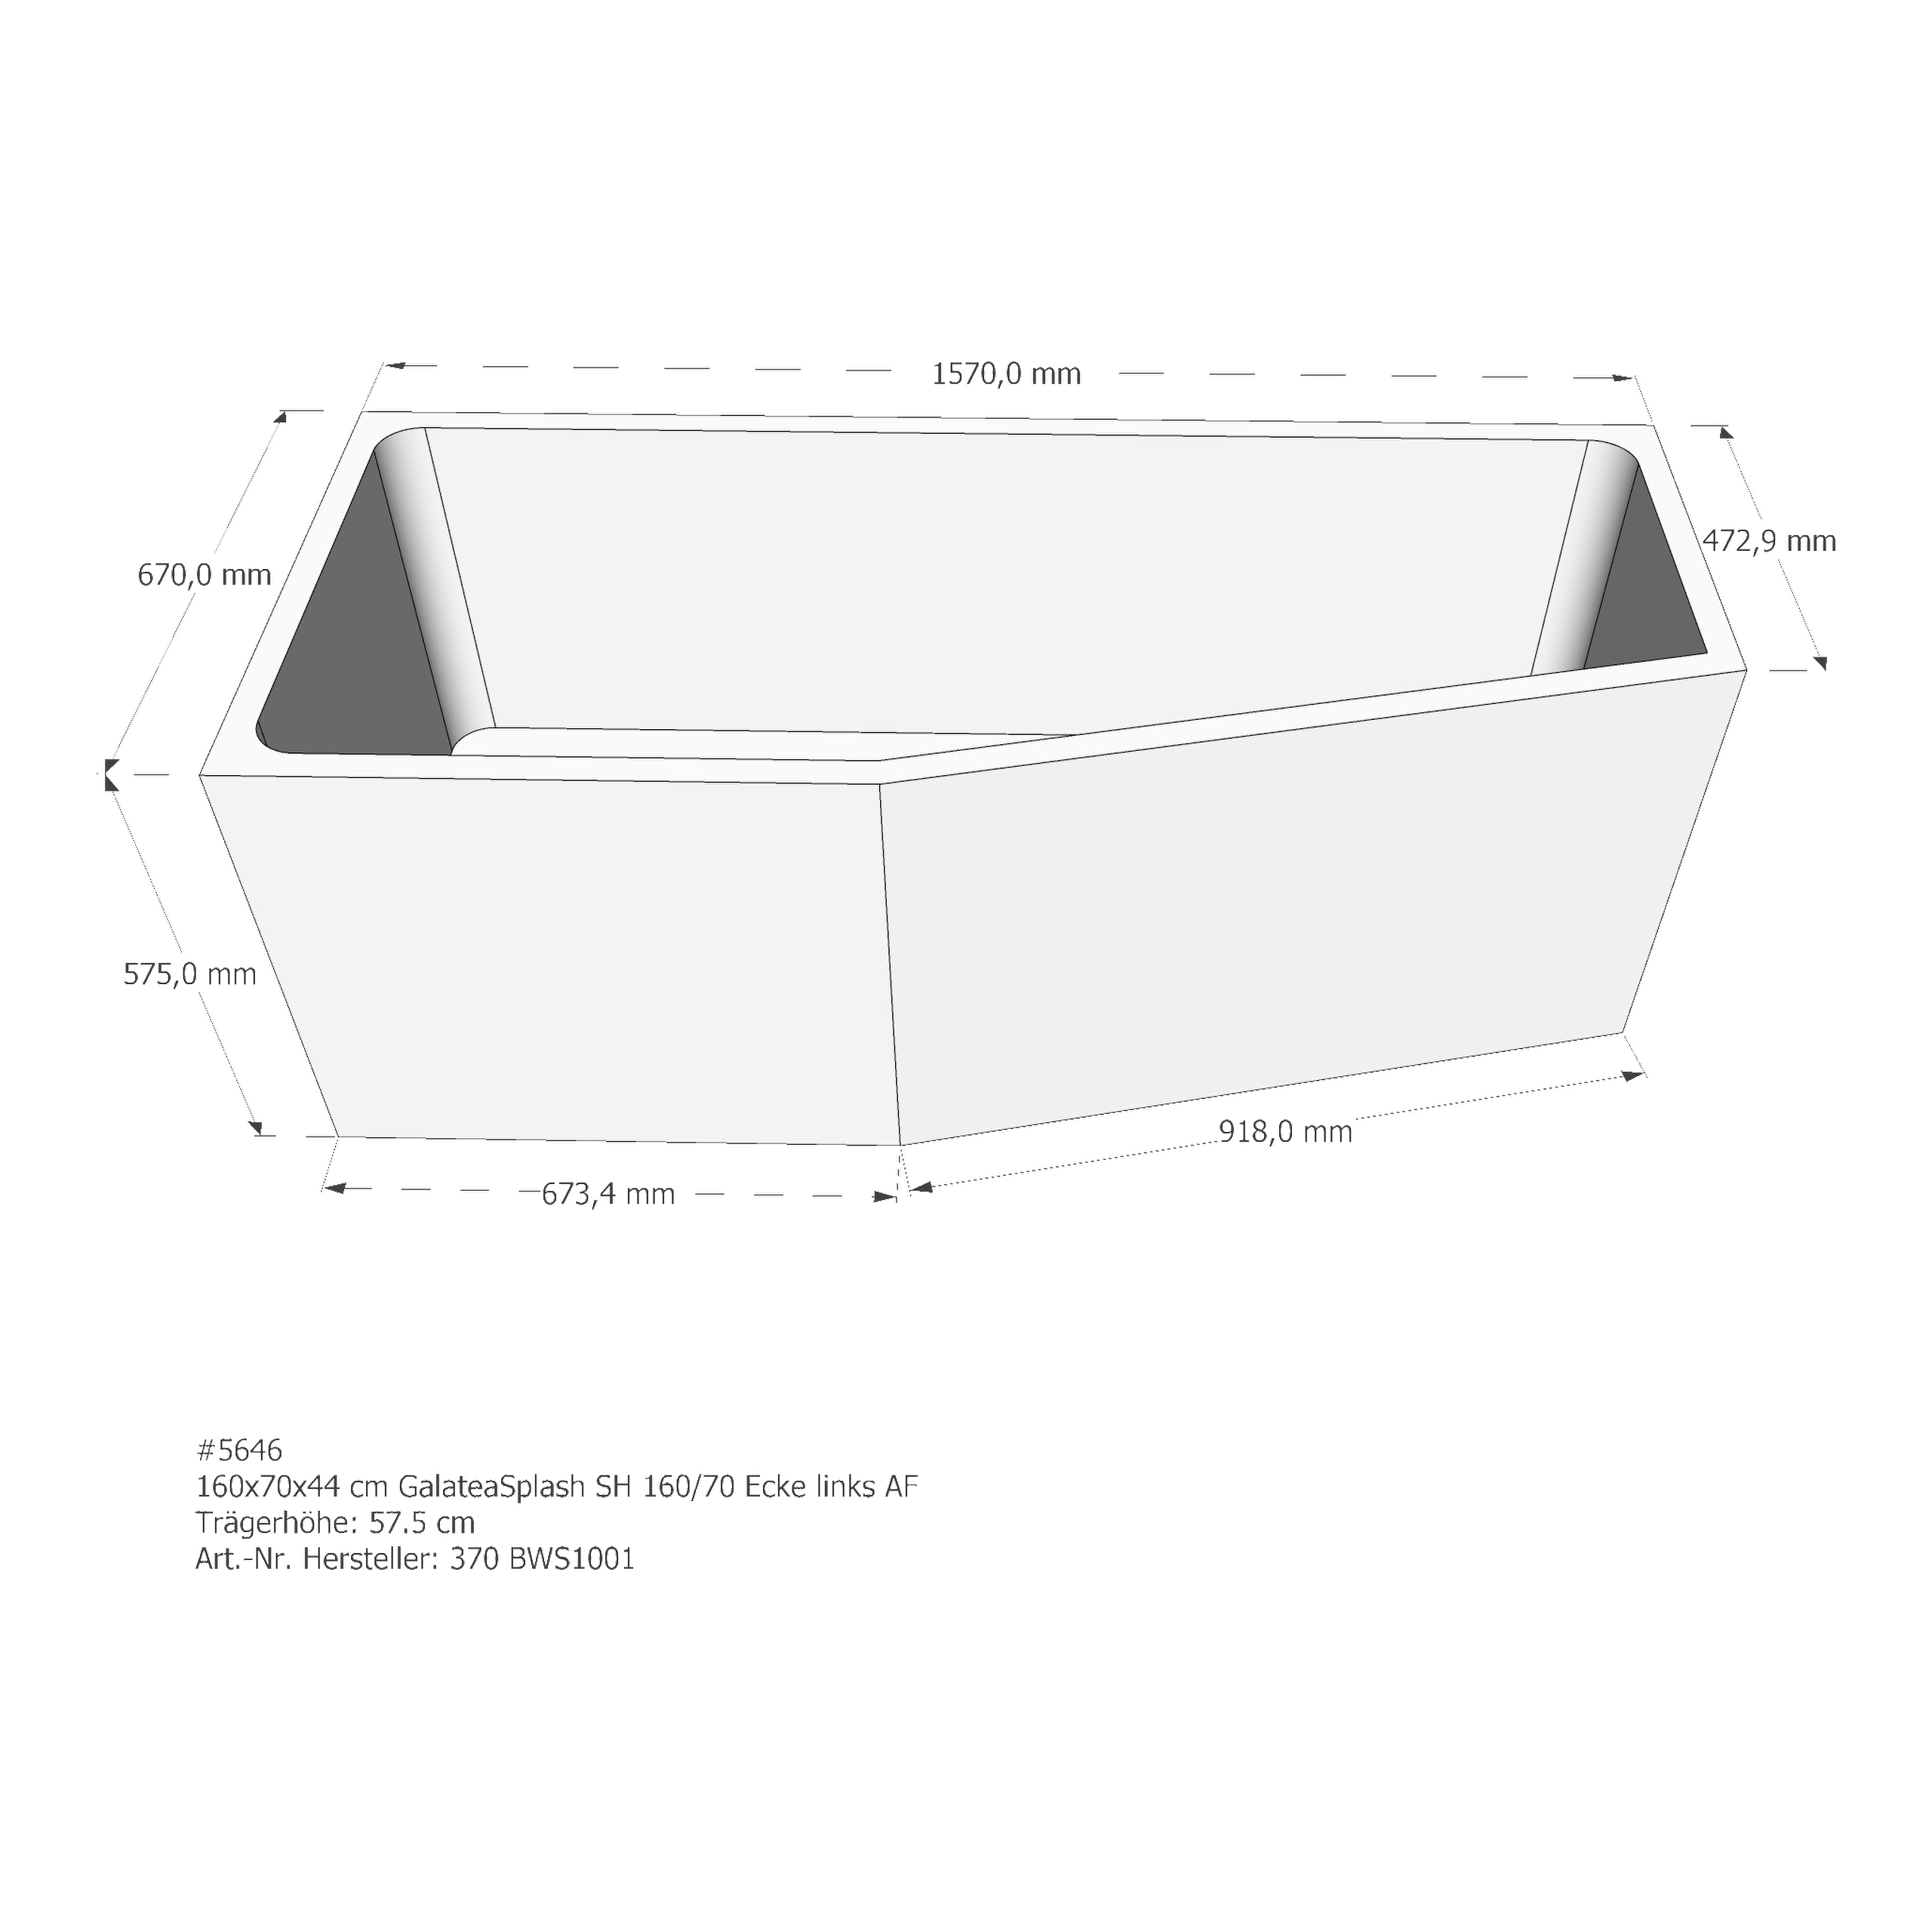 Badewannenträger für Galatea-Splash SH 160/70 Ecke links 160 × 70 × 44 cm